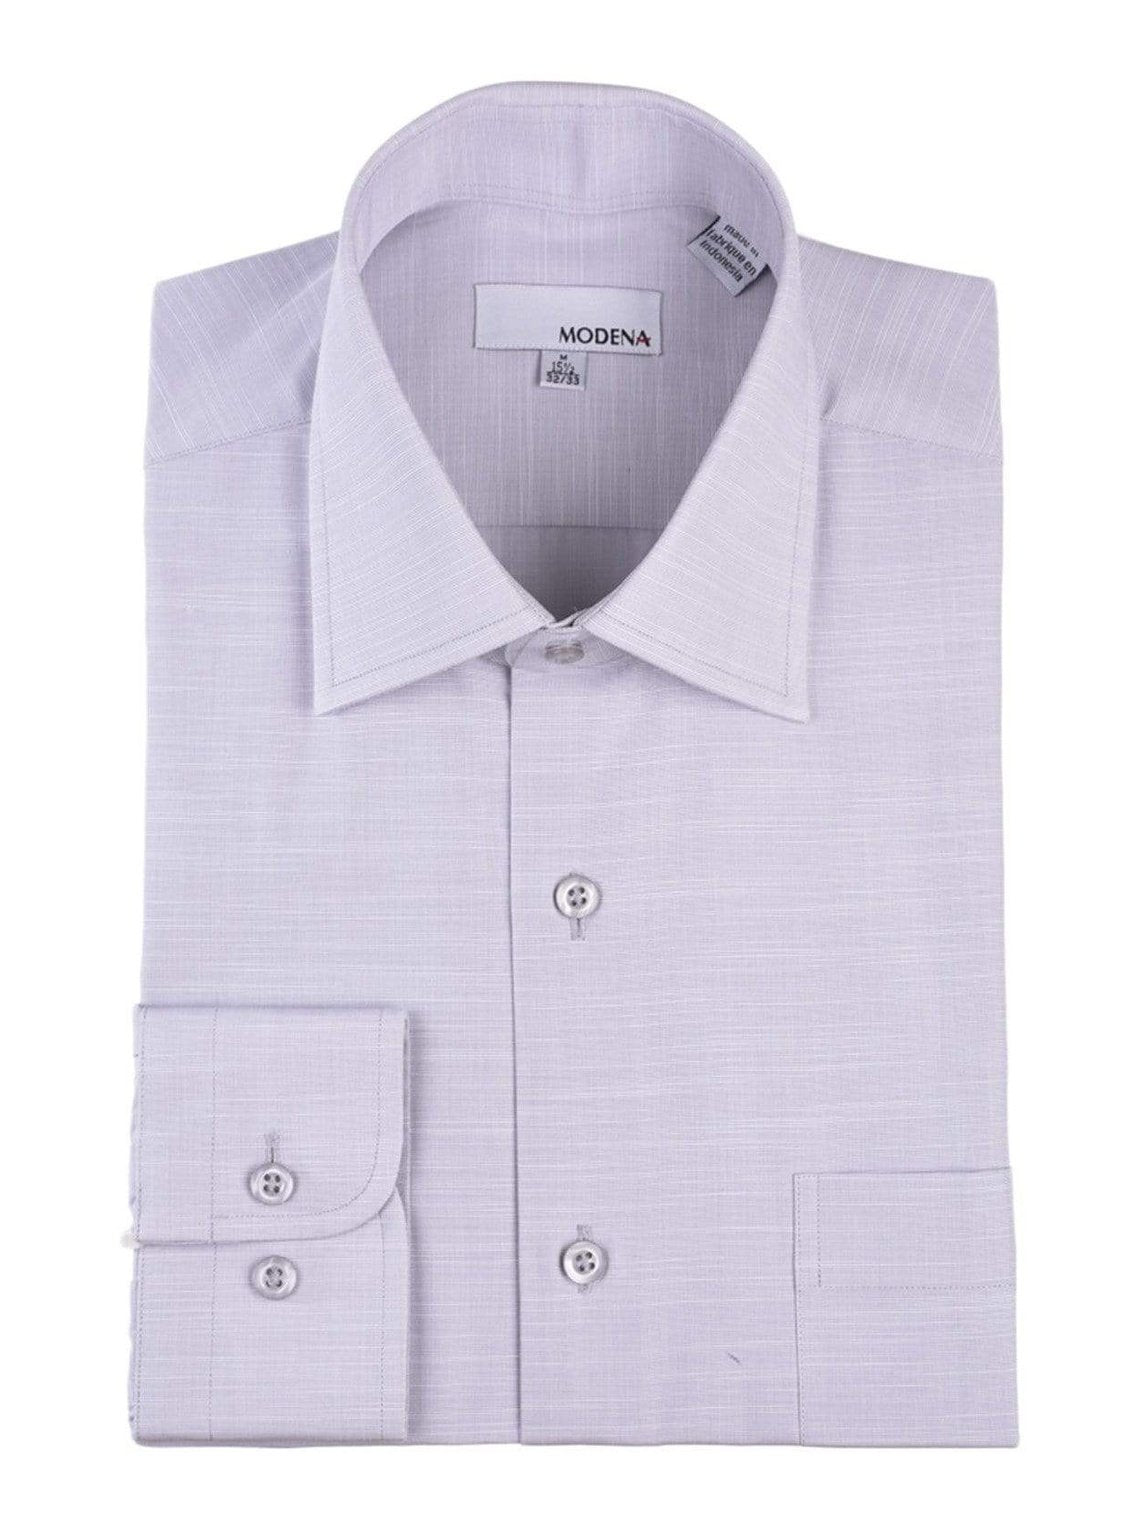 Modena Sale Shirts 14 1/2 32/33 Classic Fit Light Gray Textured Spread Collar Cotton Blend Dress Shirt